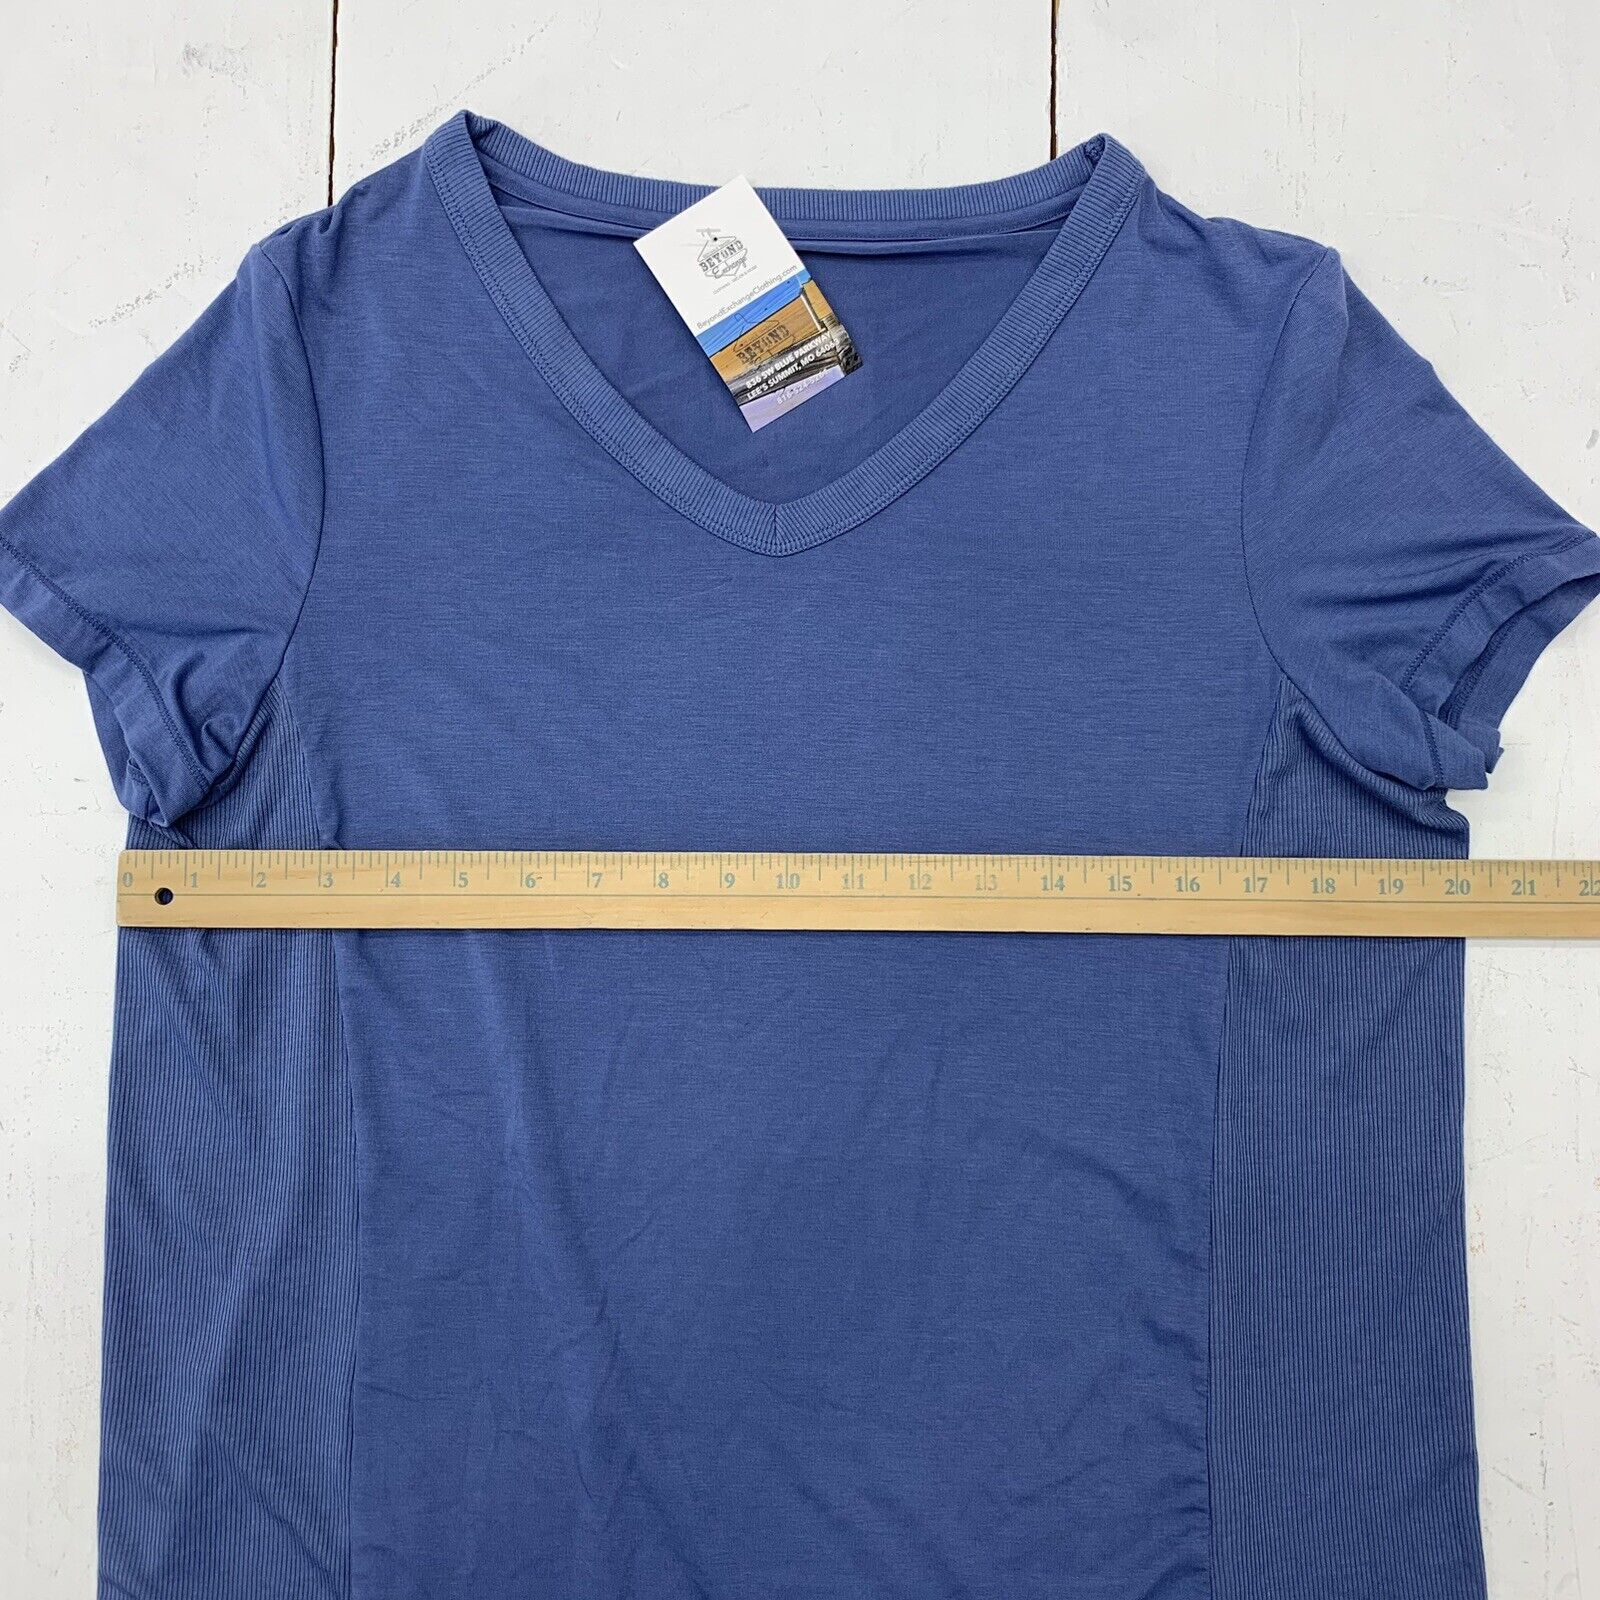 Tangerine Womens Blue Athletic Short Sleeve Size Medium - beyond exchange